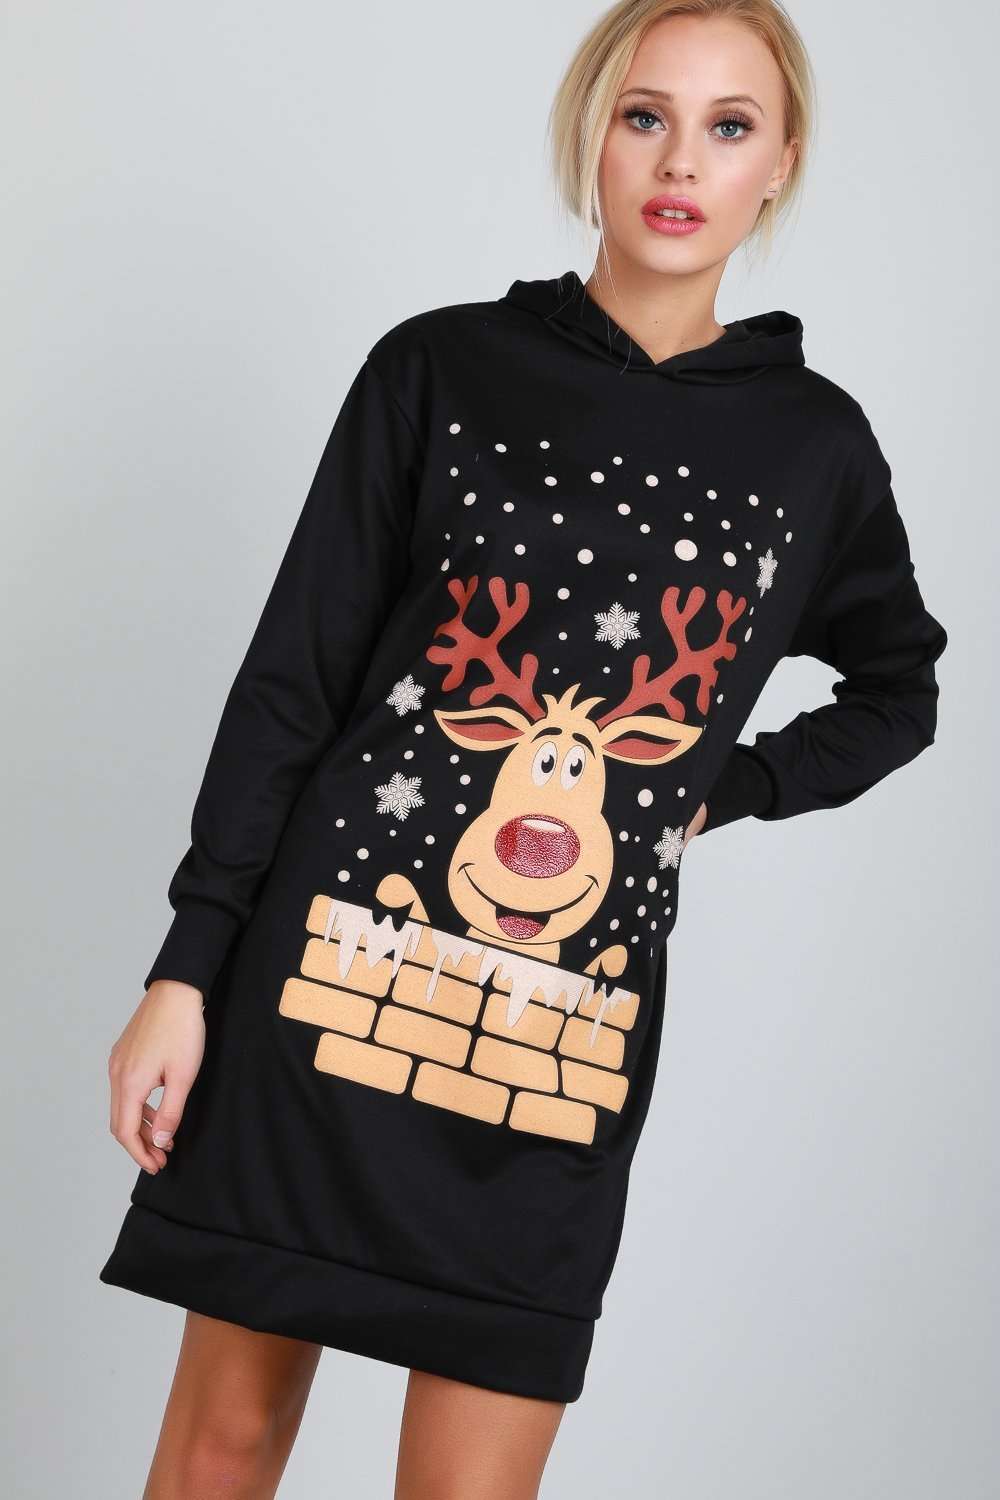 Long Sleeve Reindeer Graphic Print Christmas Jumper Dress - bejealous-com